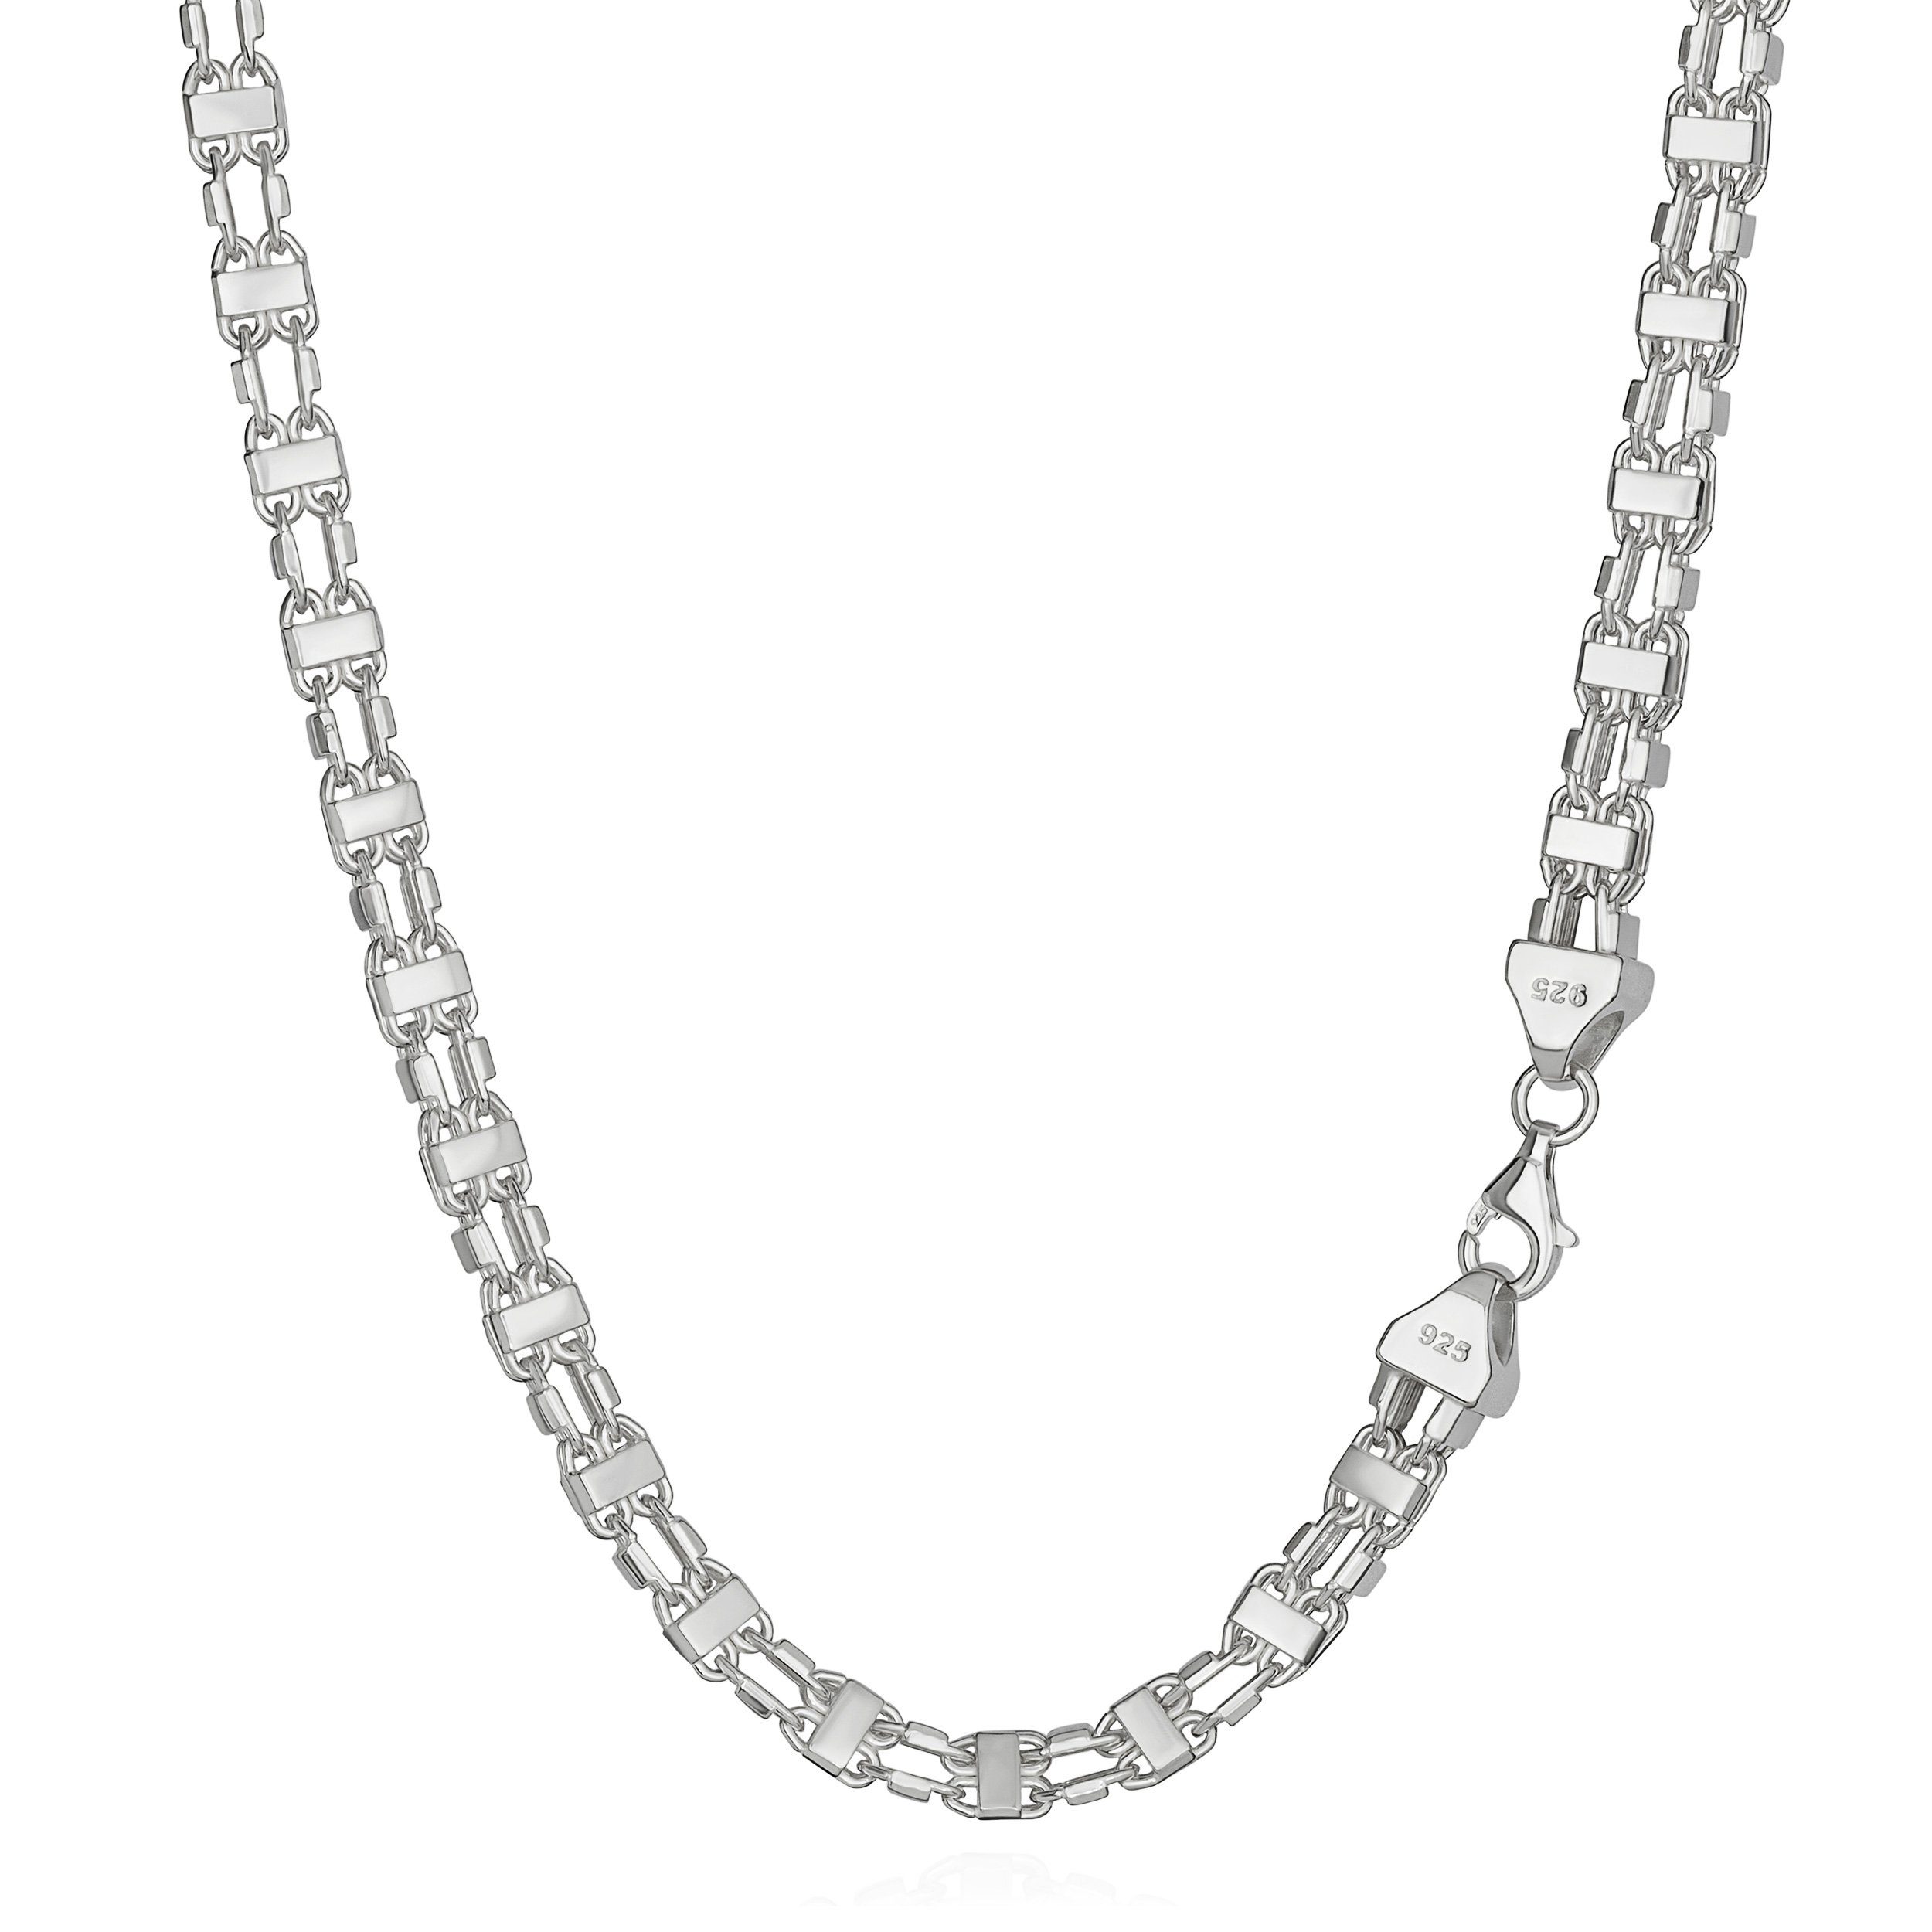 NKlaus Silberkette Elegante Herren - Halskette 55cm Session Kette 925 Silber 7mm breit Si (1 Stück), Made in Germany